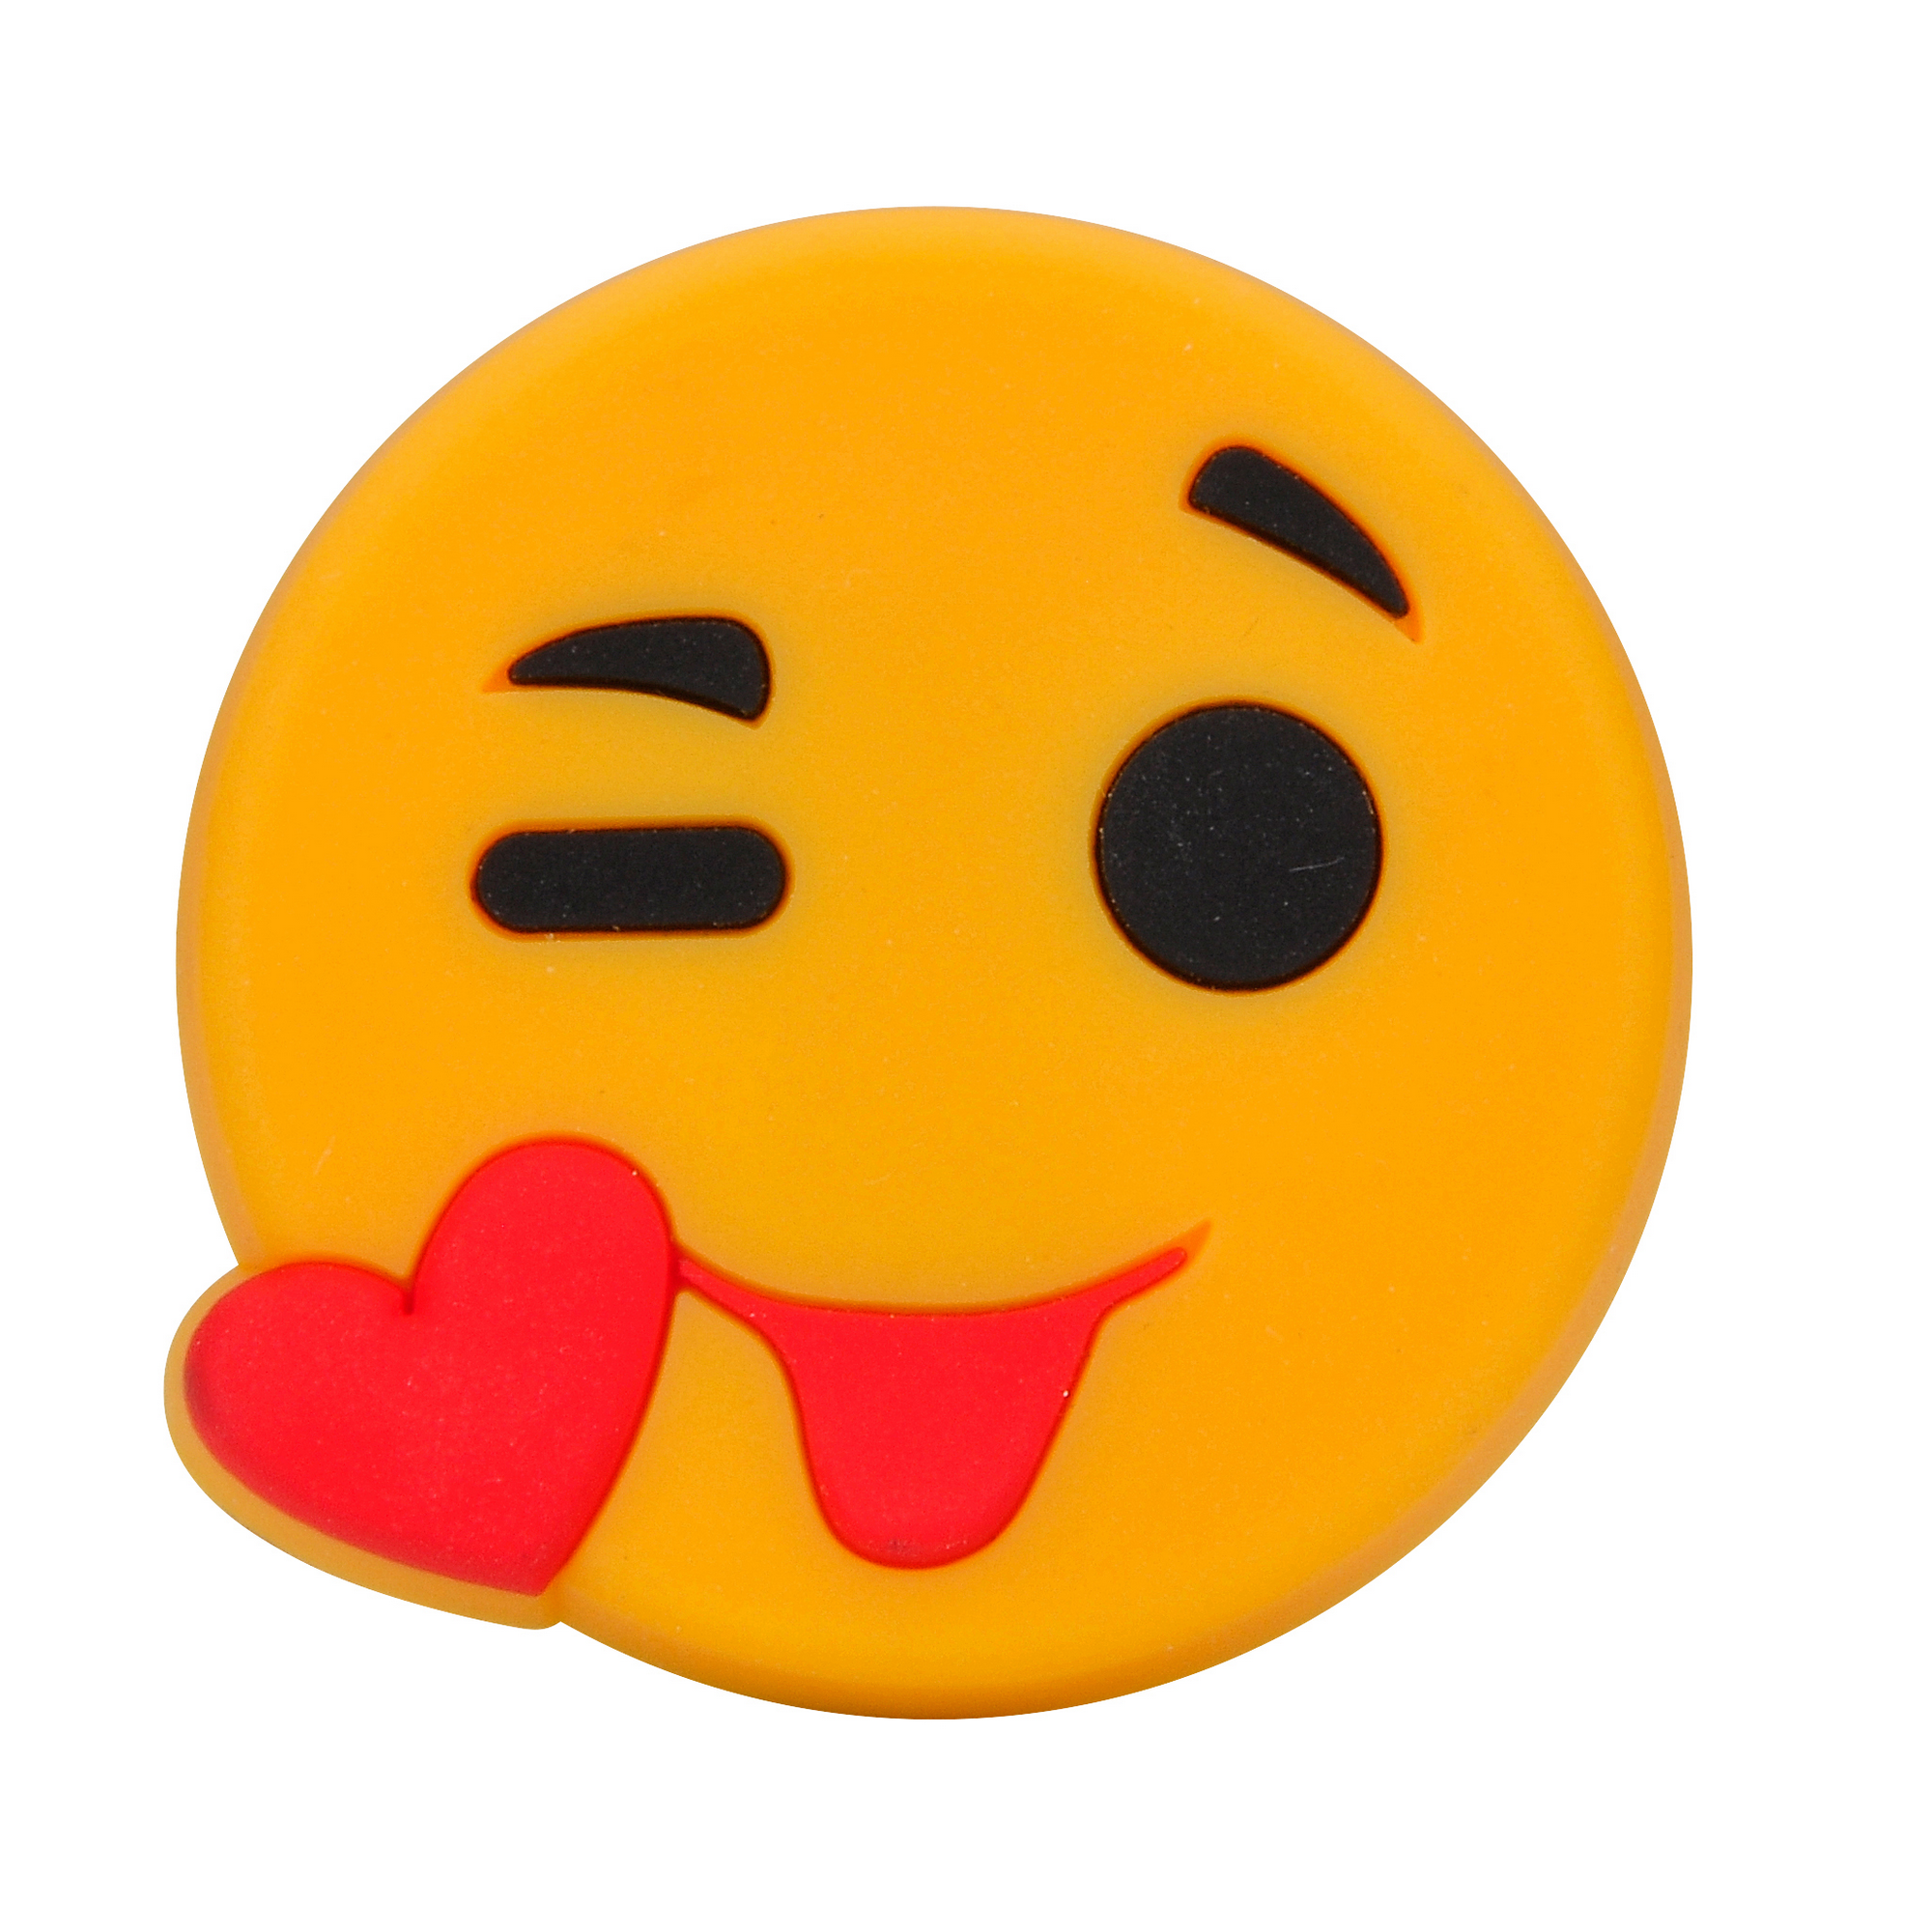 Möbelknopf 'Emoji Smiley H243' Kunststoff 5,1 x 5,2 x 2,5 cm Ø Sockel 1,3 cm + product picture